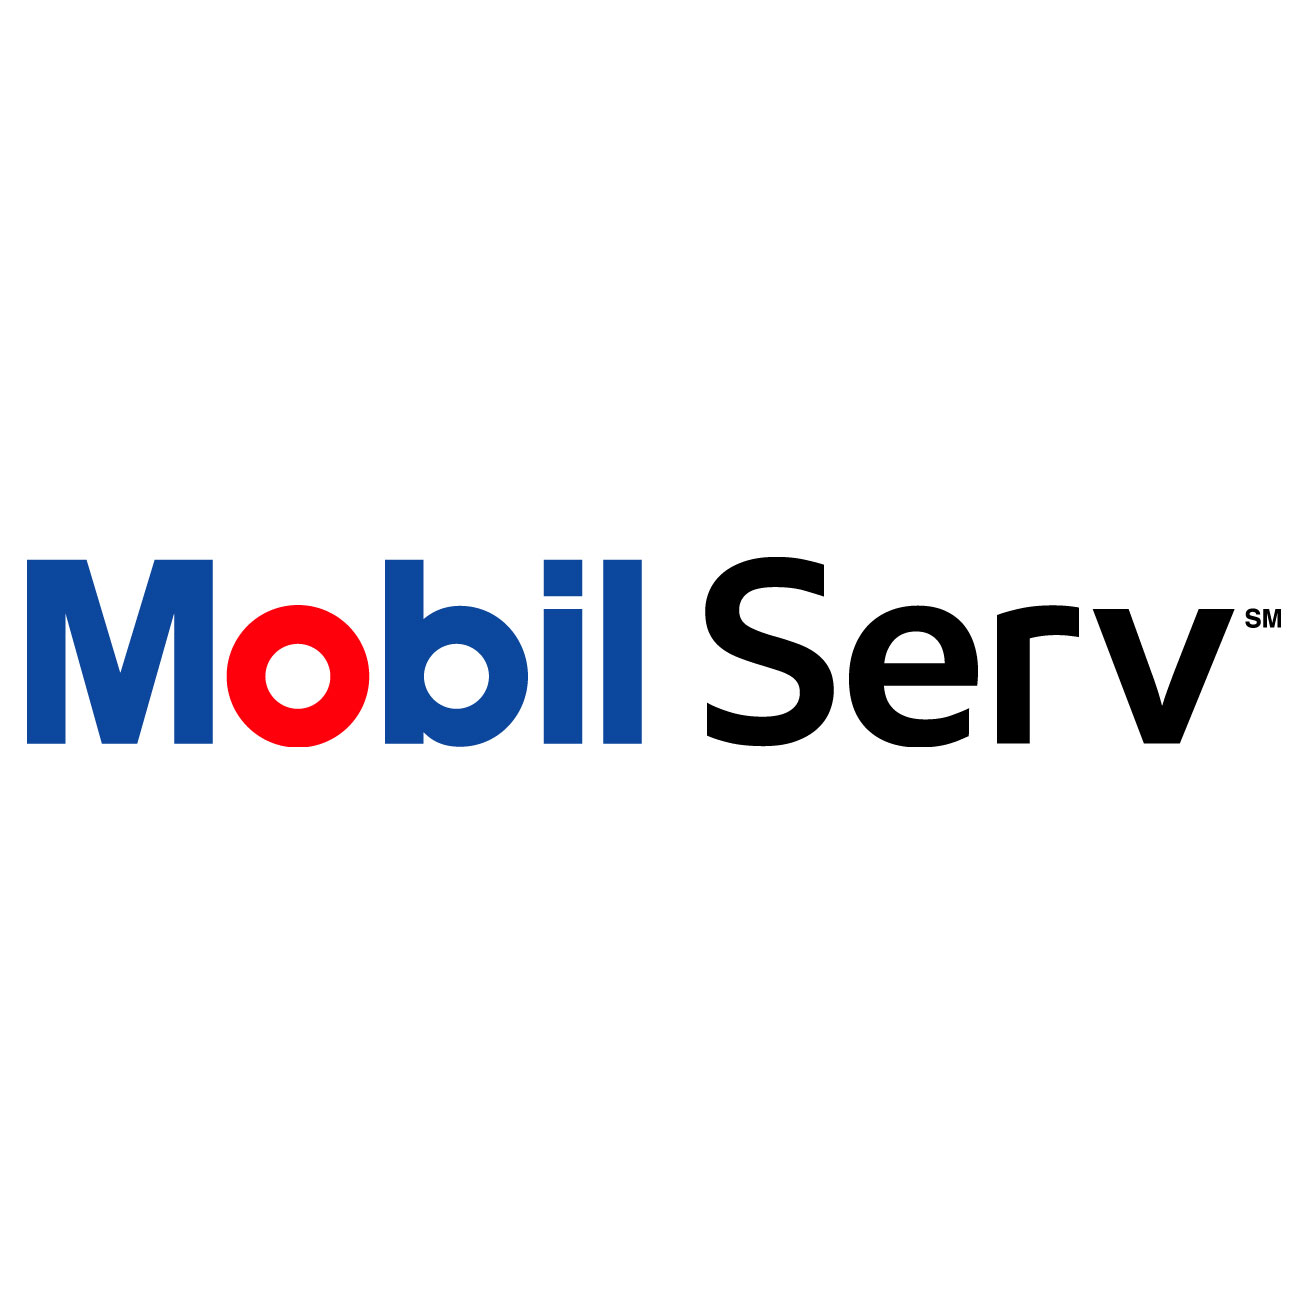 mobil serv logo